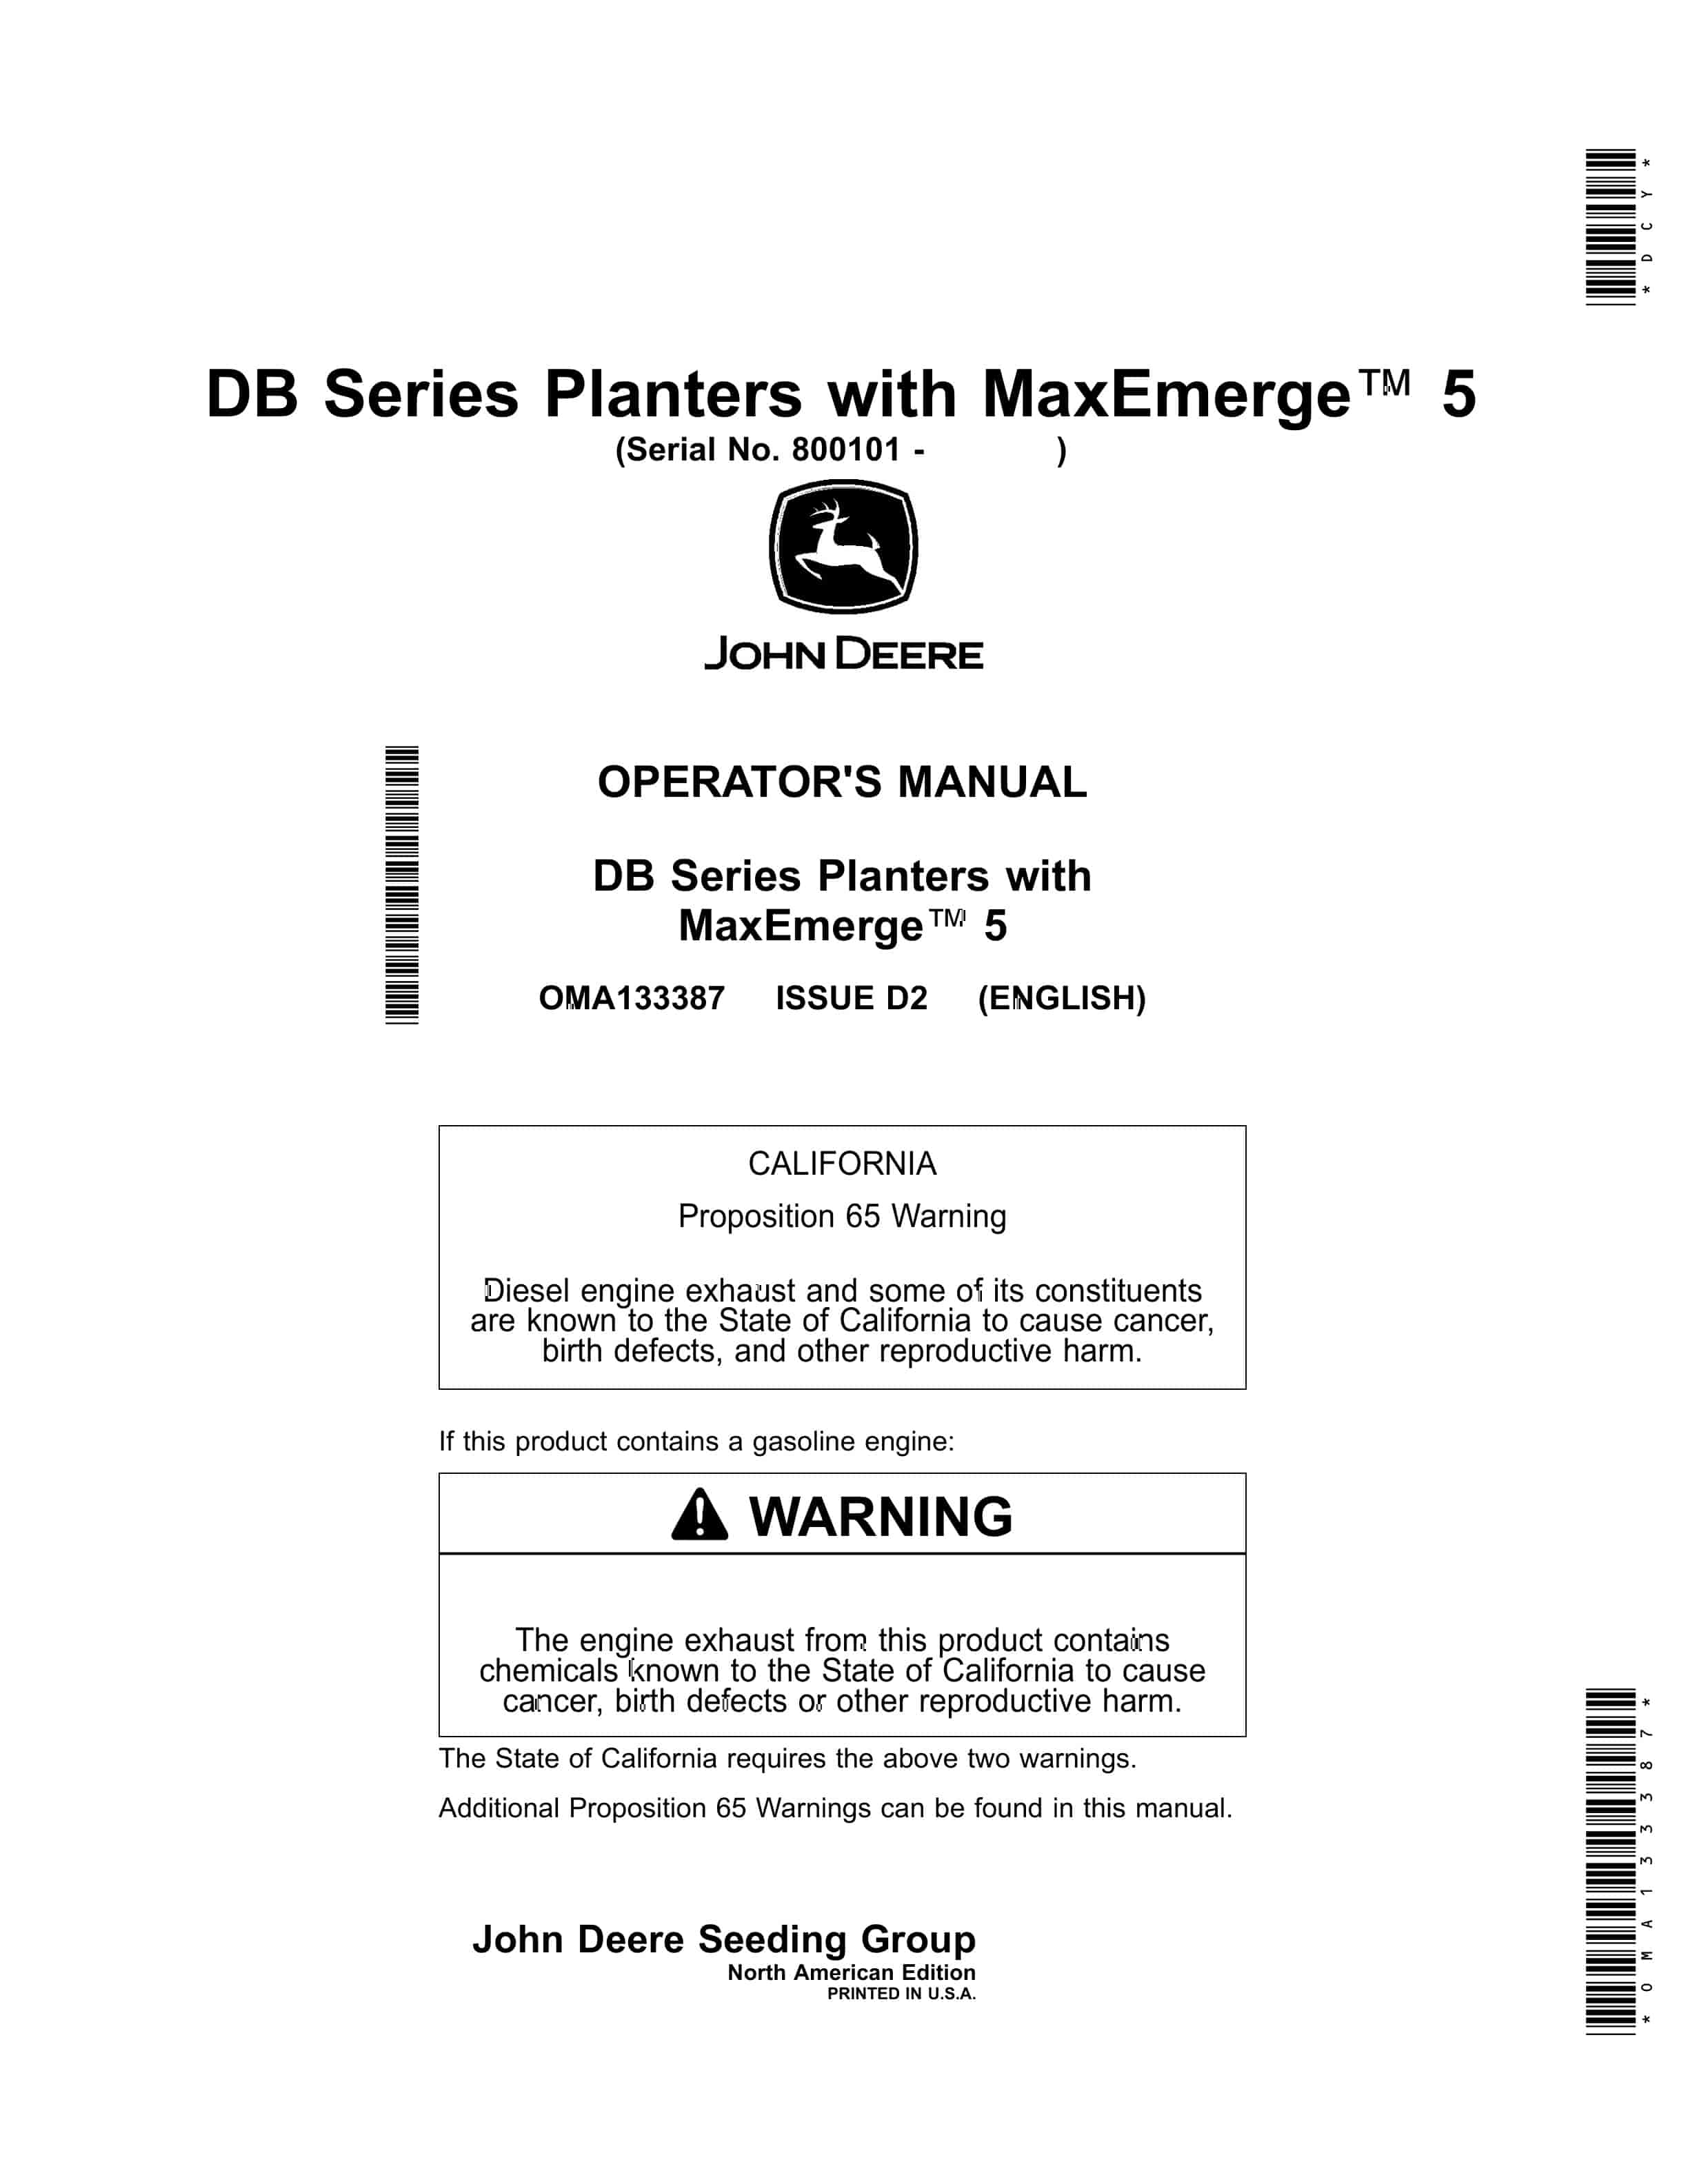 John Deere DB Series Planters with MaxEmerge 5 Operator Manual OMA133387 1